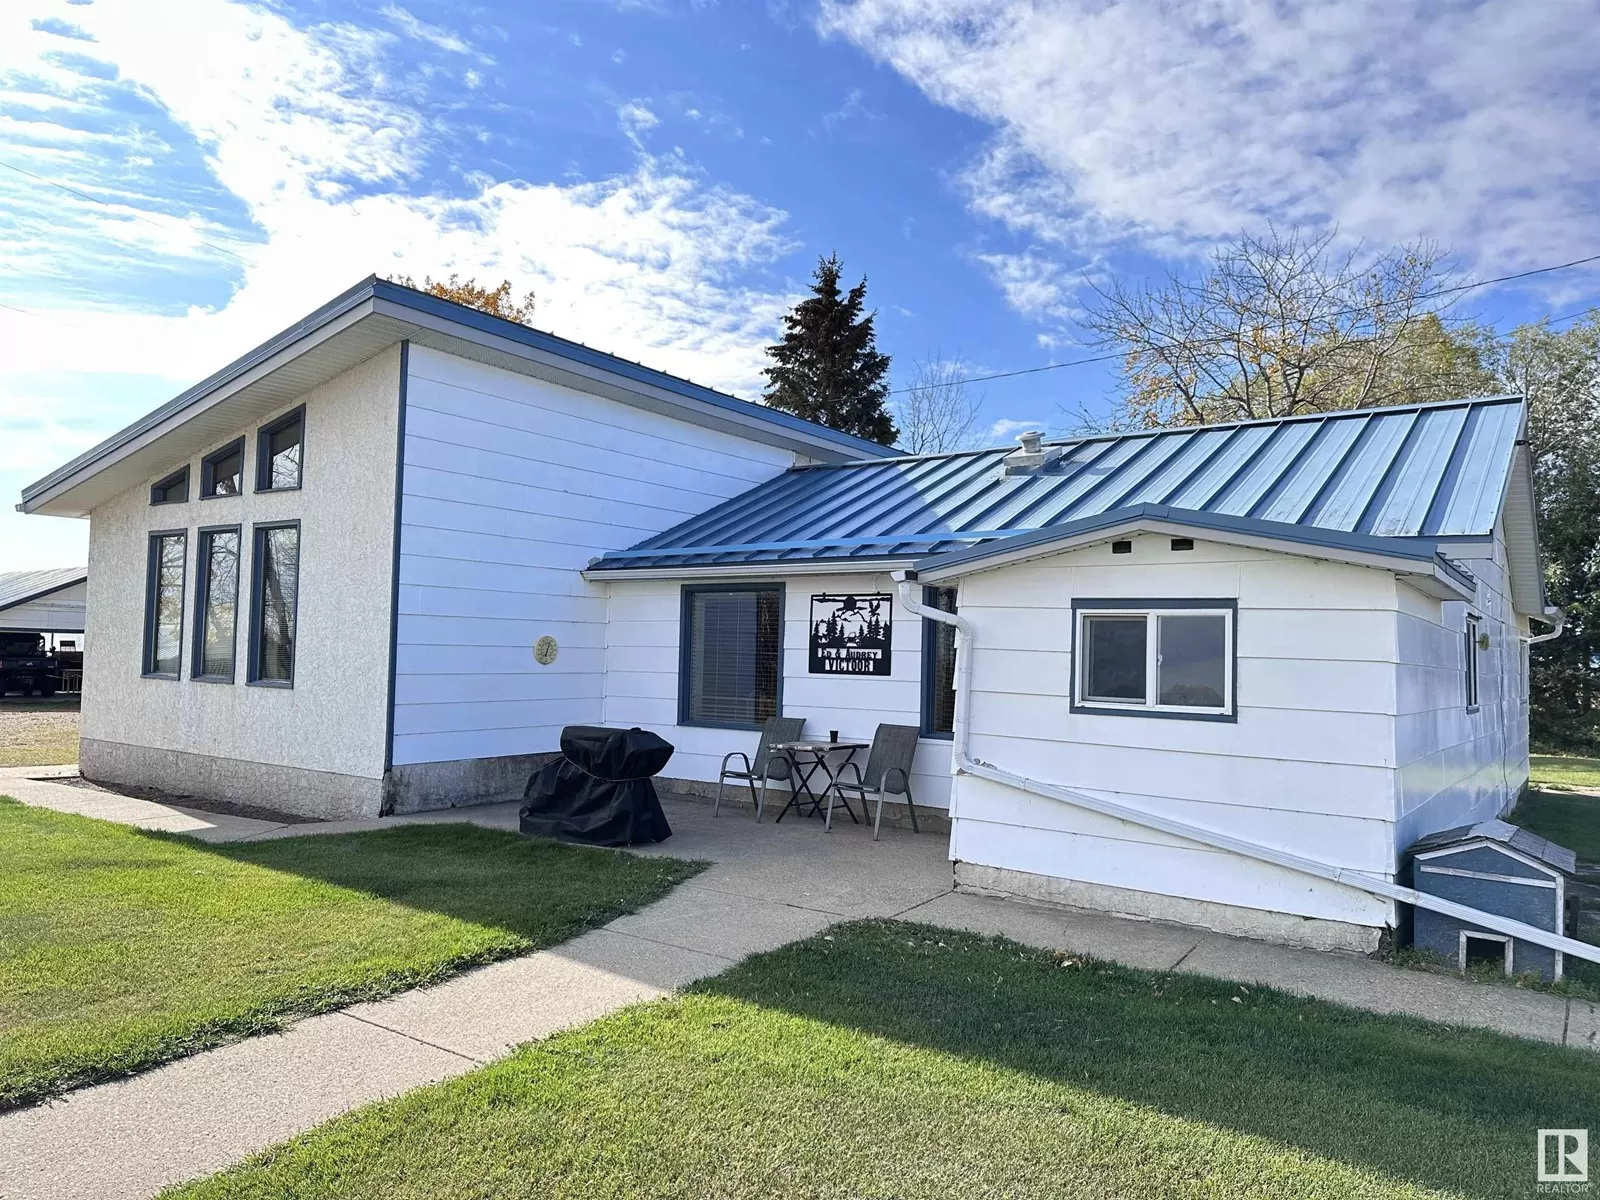 House for rent: 26423 & 26427 Twp Rd 590, Rural Westlock County, Alberta T7P 2N9